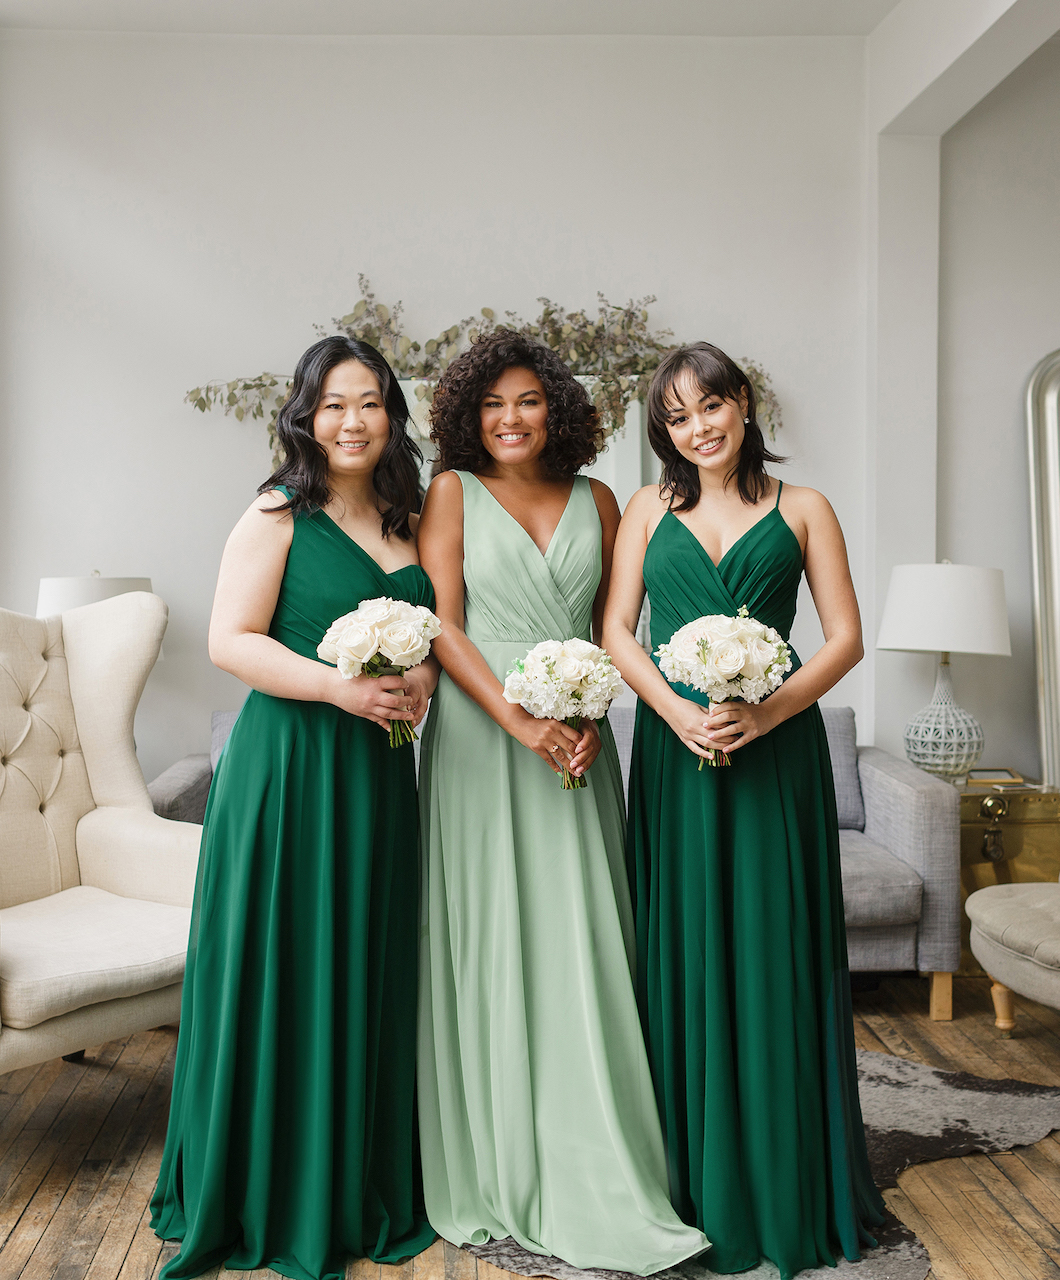 3 bridesmaids wearing green mix and match bridesmaid dresses